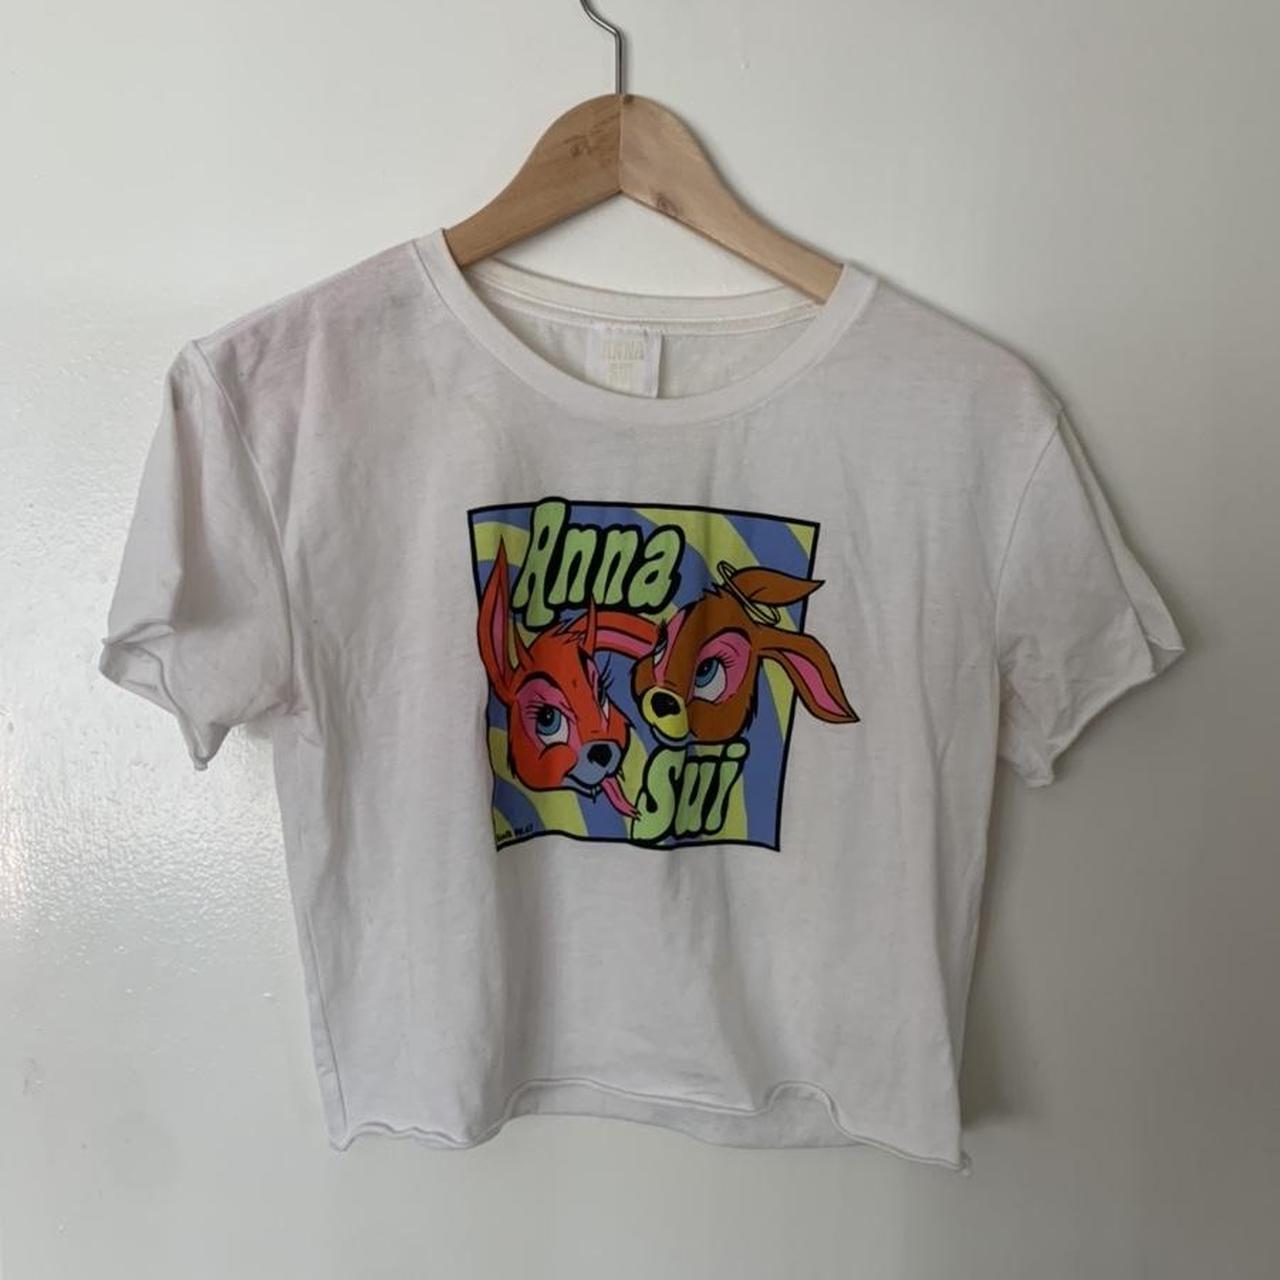 Anna Sui Women's multi T-shirt (2)